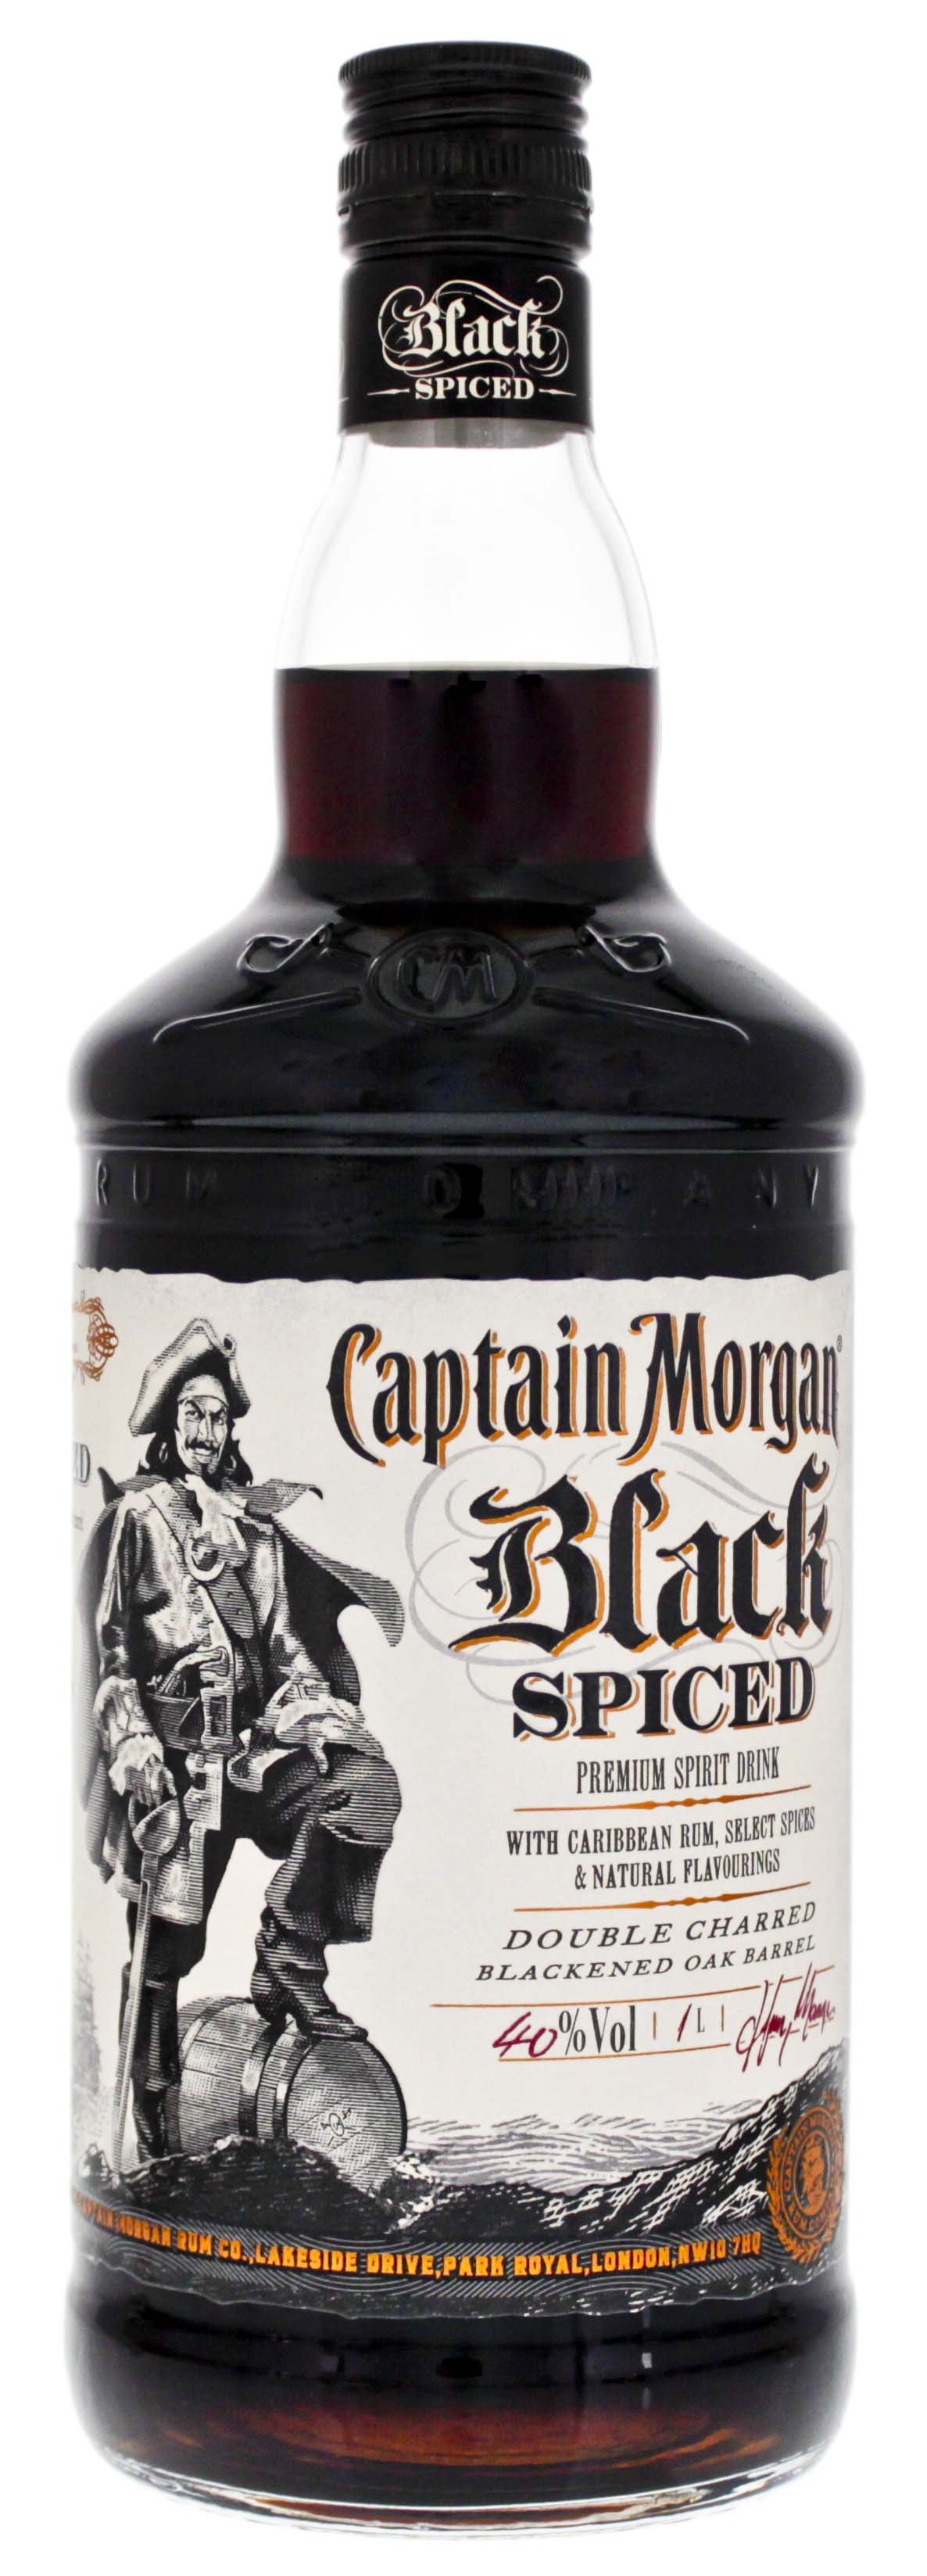 New Captain Morgan Black Spiced rum